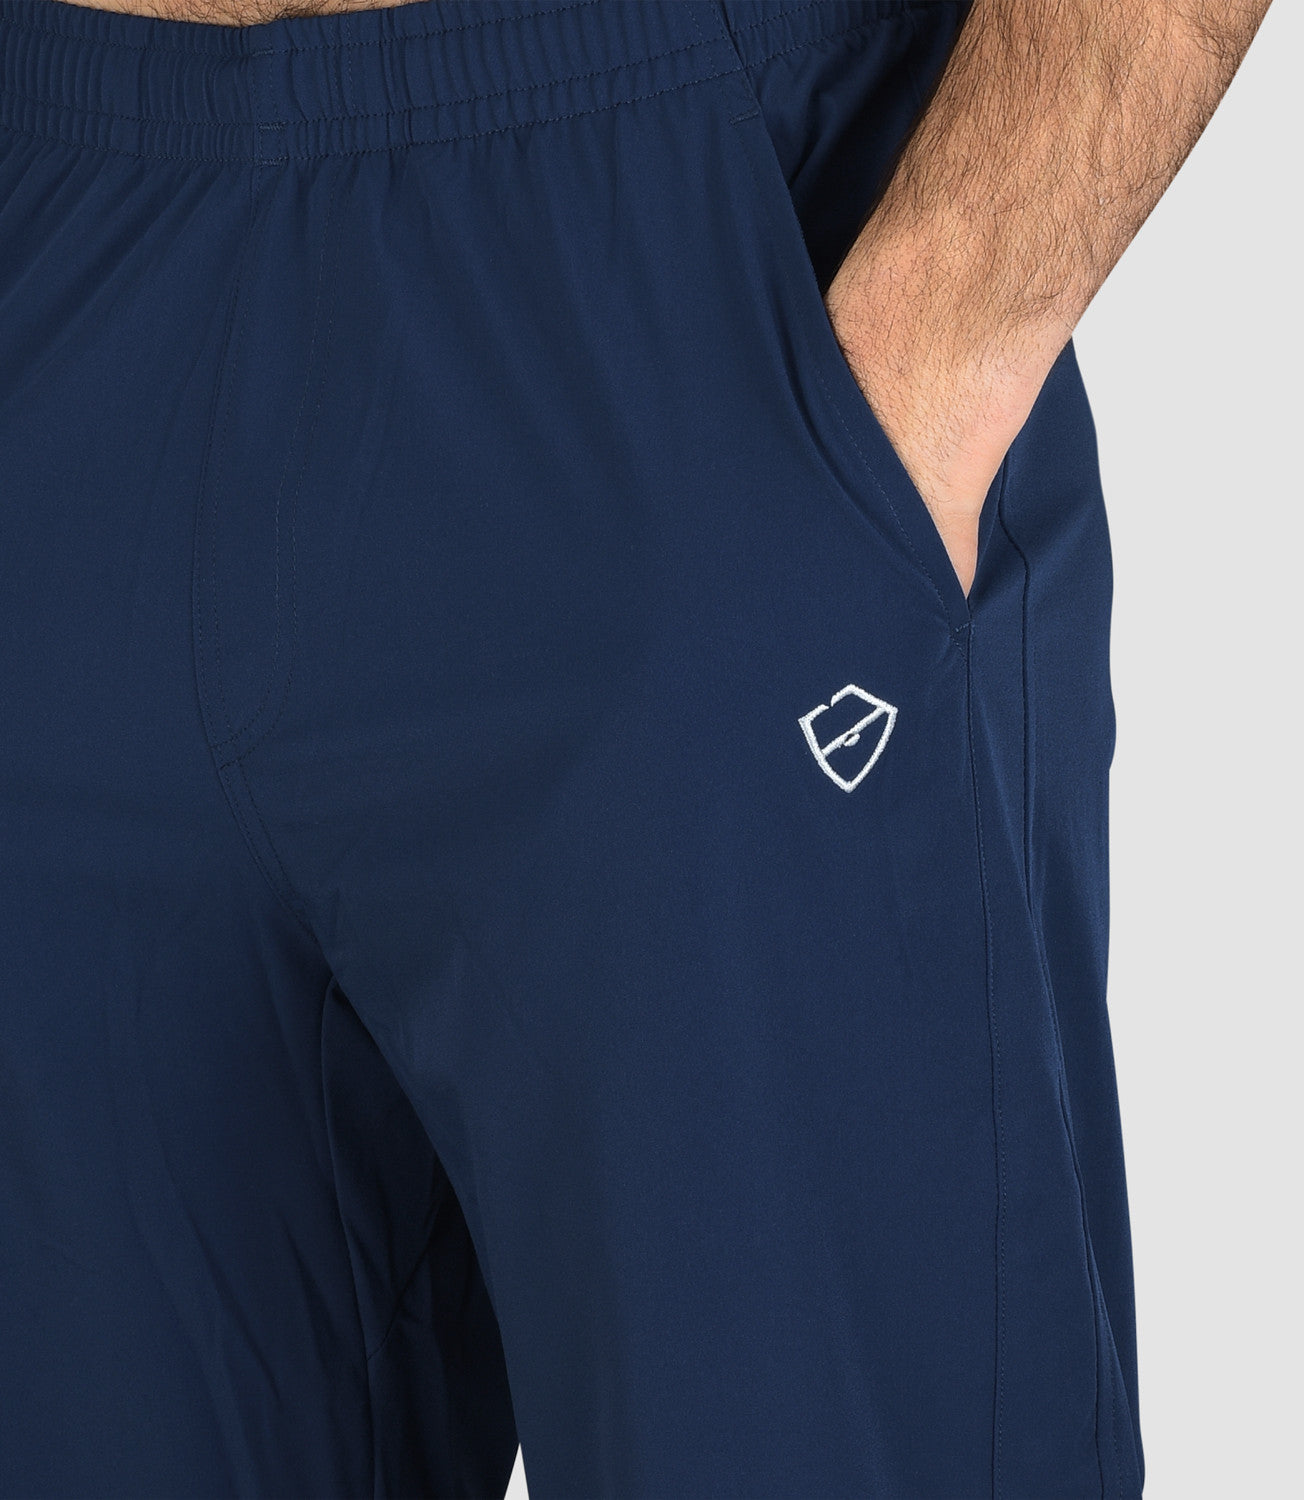 Tennis Trousers Pants Men's-Leon Classic Pant-Blue-S-PlayBrave Sports UK